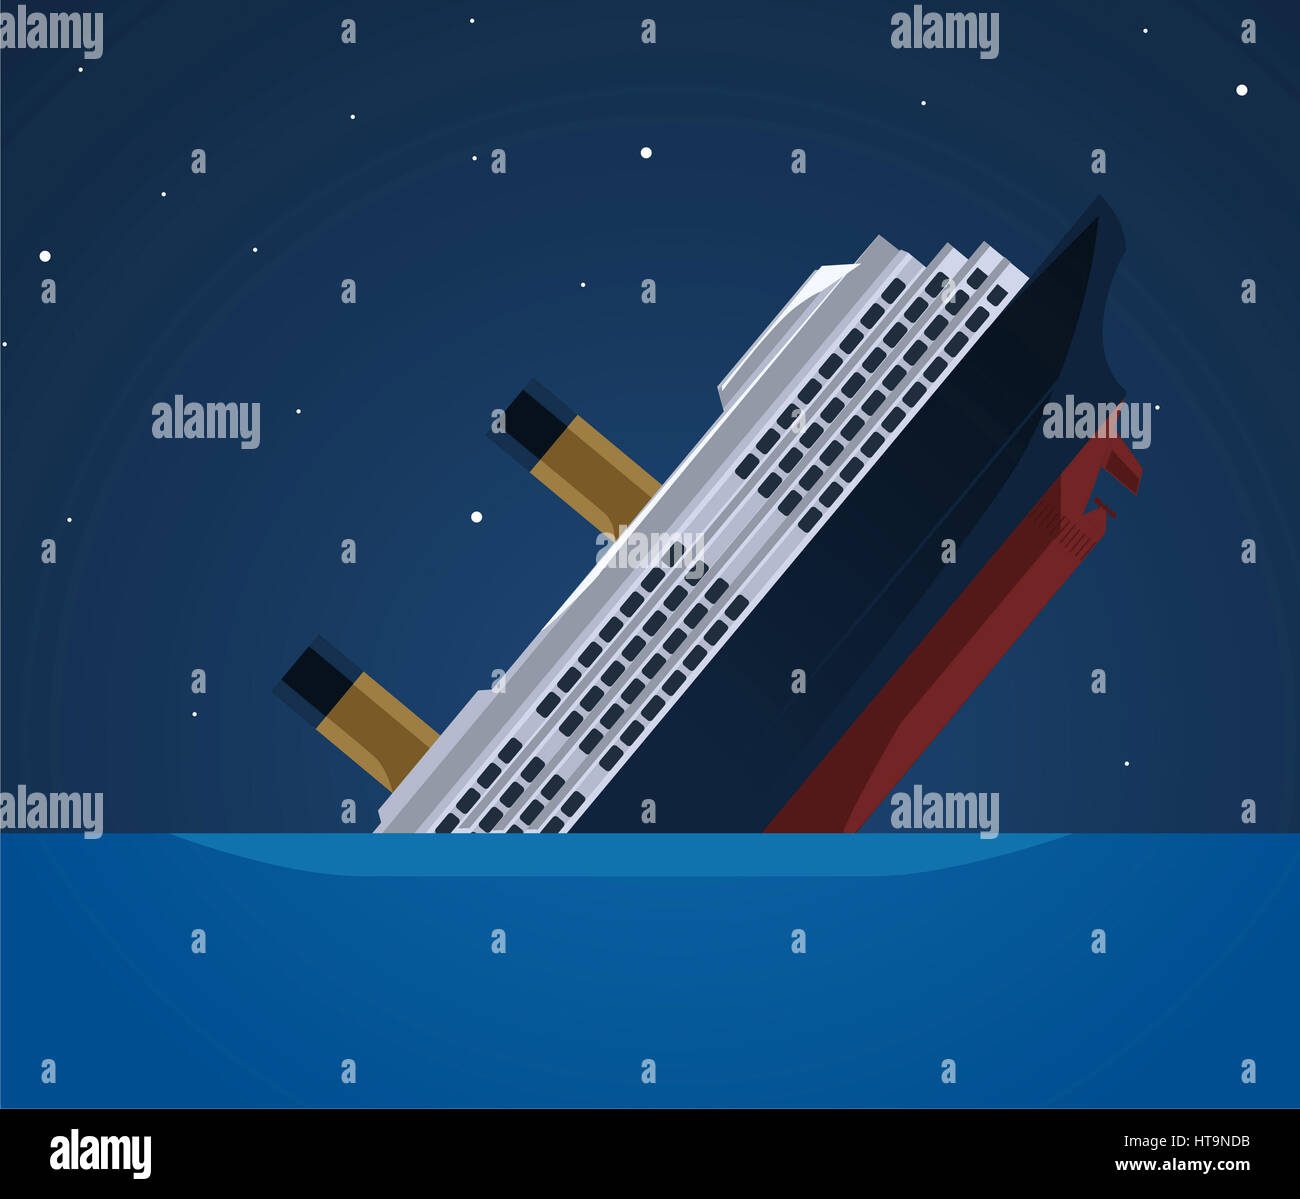 Sinking ship illustration Stock Photo